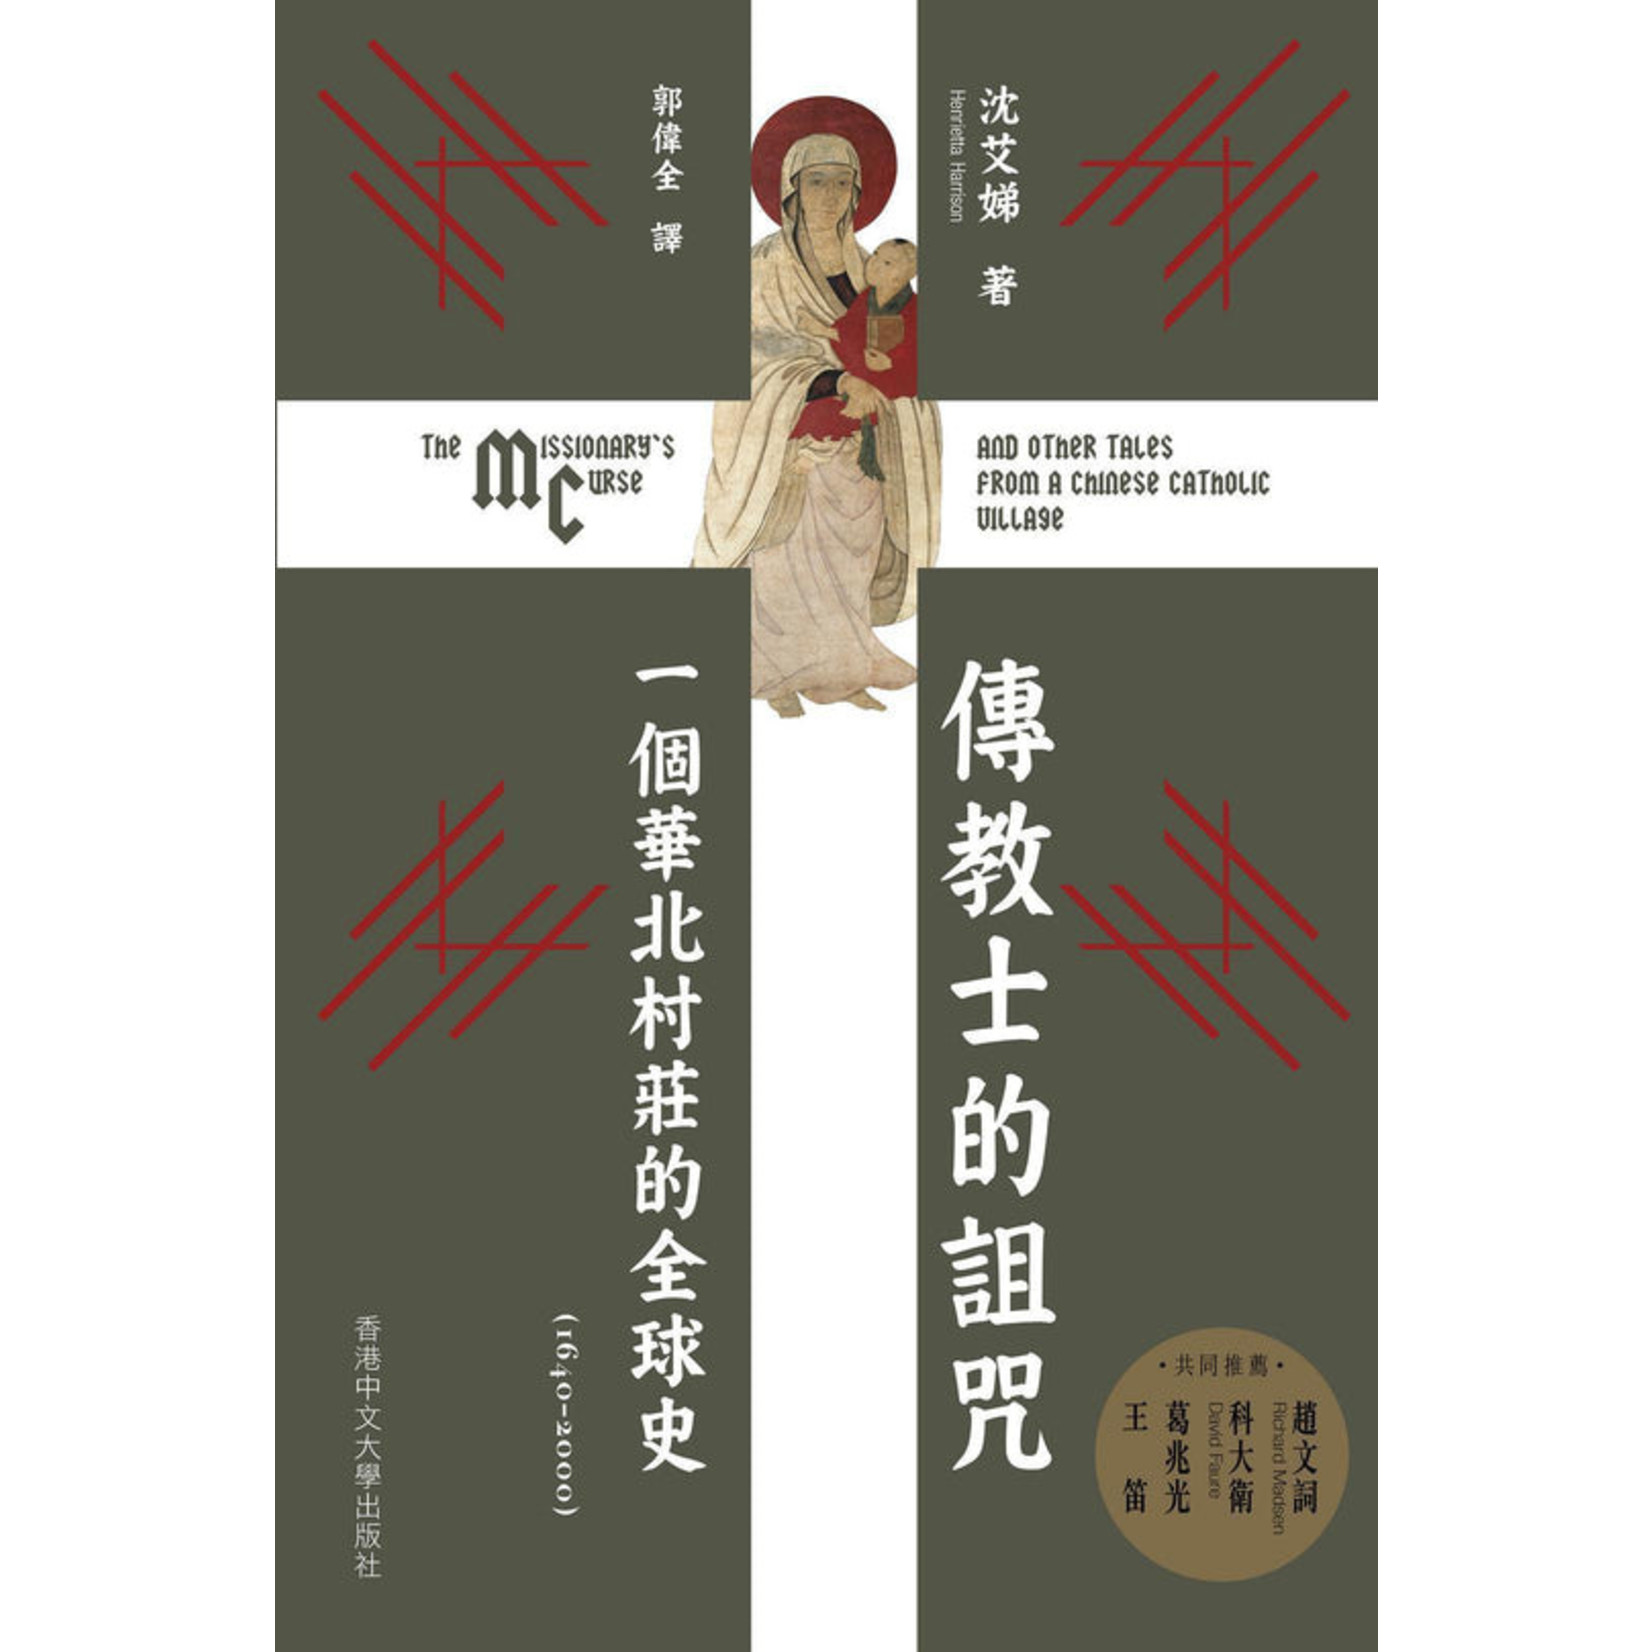 中文大學 The Chinese University of Hong Kong Press 傳教士的詛咒：一個華北村莊的全球史（1640–2000） | The Missionary's Curse: And Other Tales from a Chinese Catholic Village